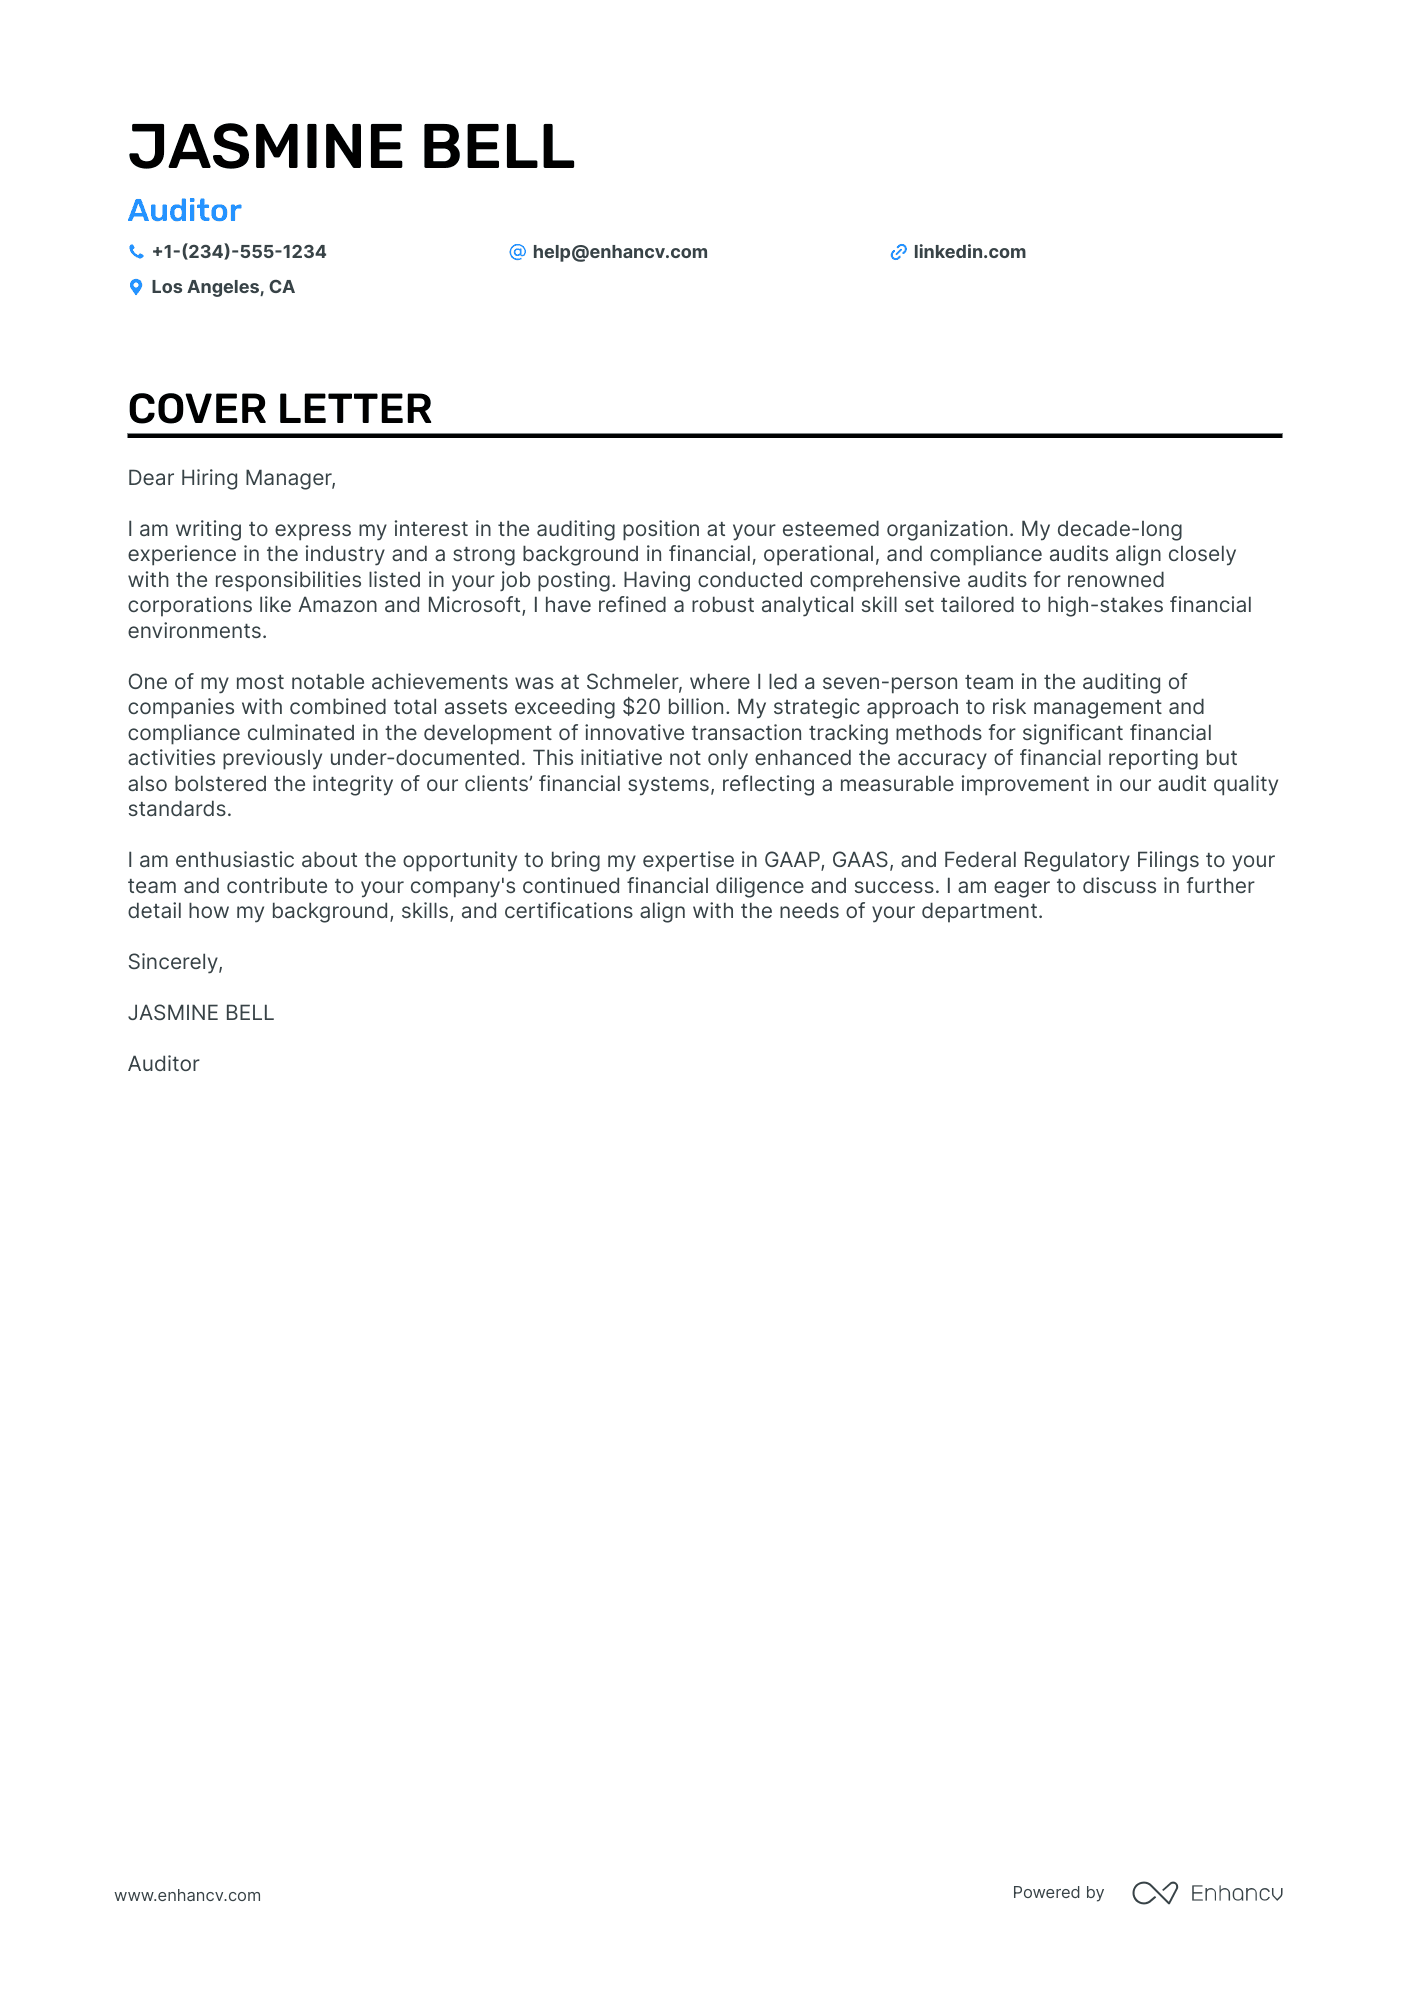 Auditor cover letter